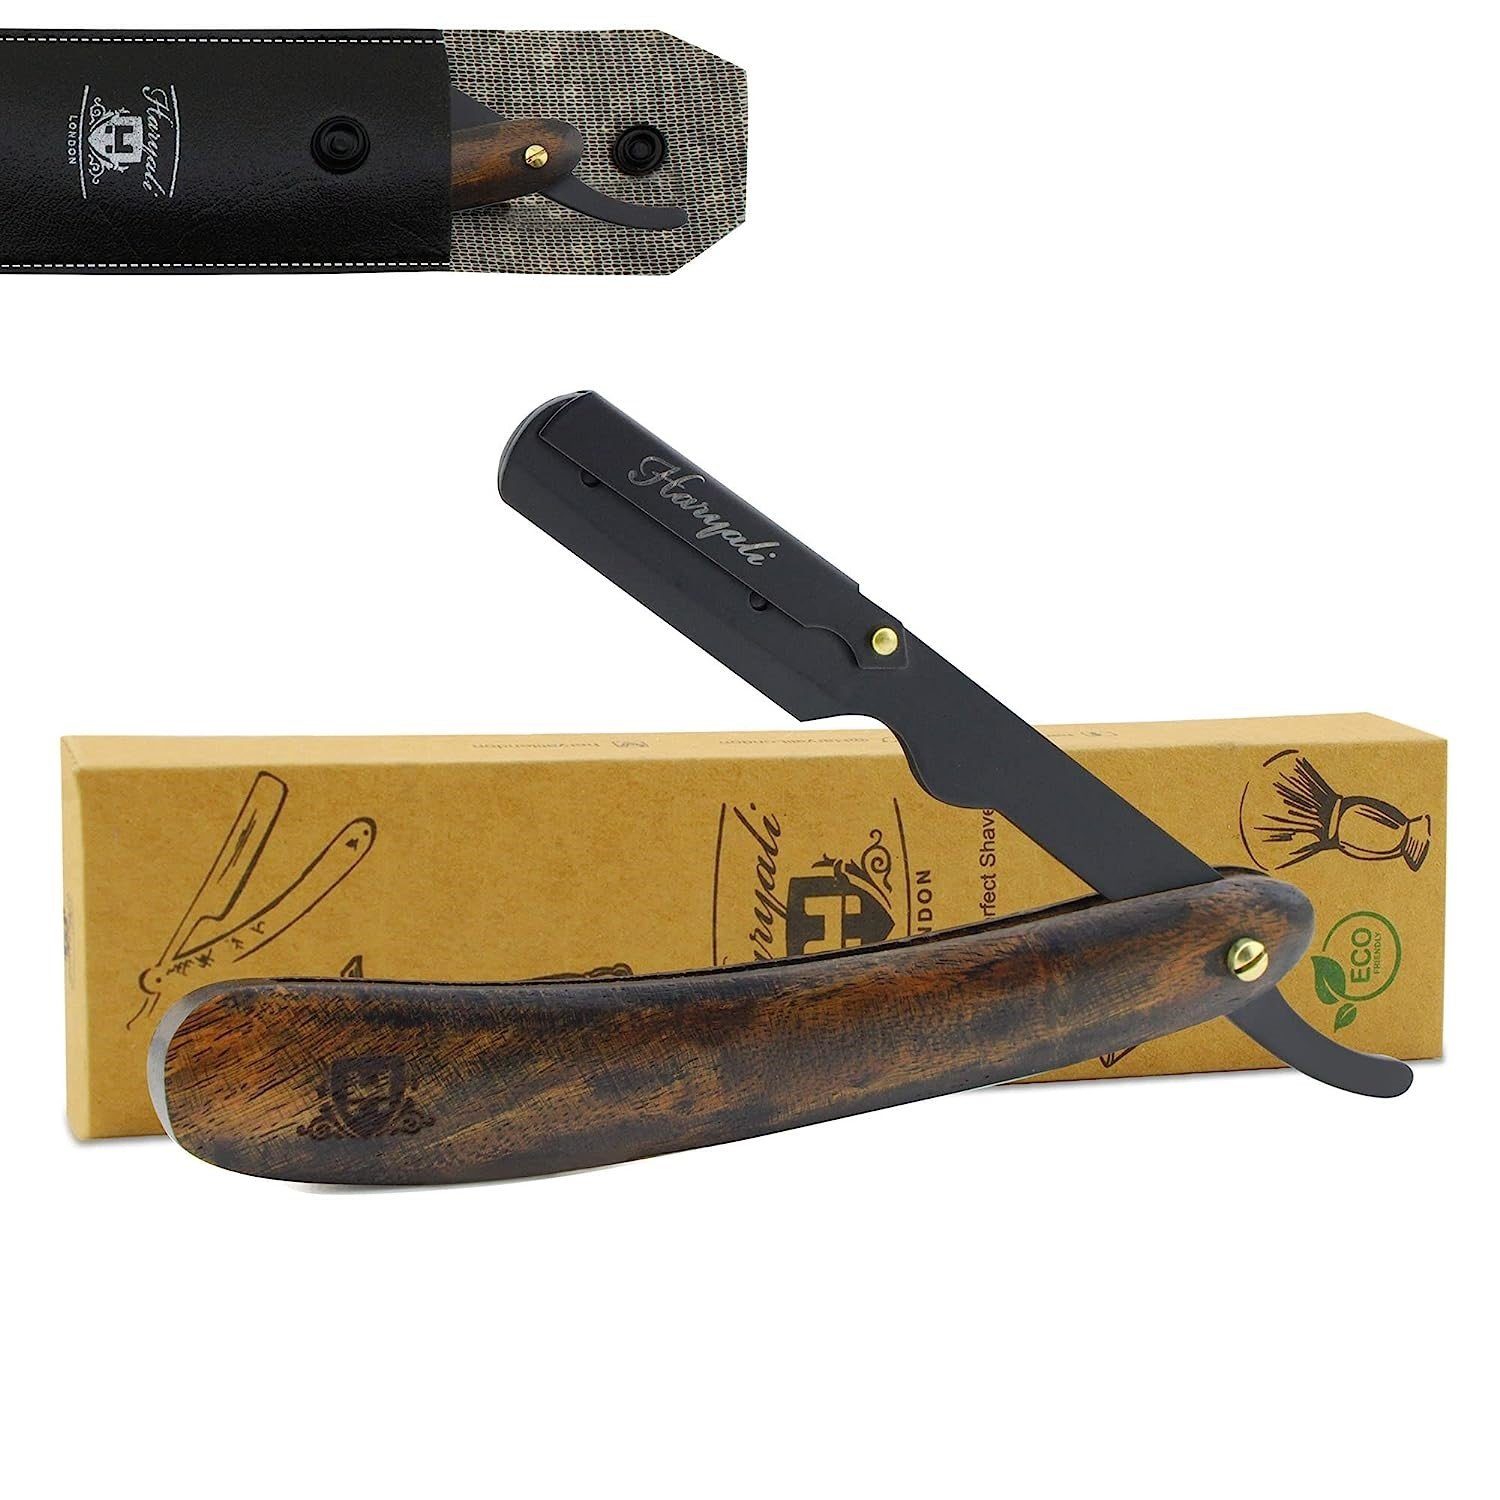 Haryali London Rasiermesser Rasiermesser Bartmesser mit Dark Holzgriff Wood London - Nachhaltige Haryali